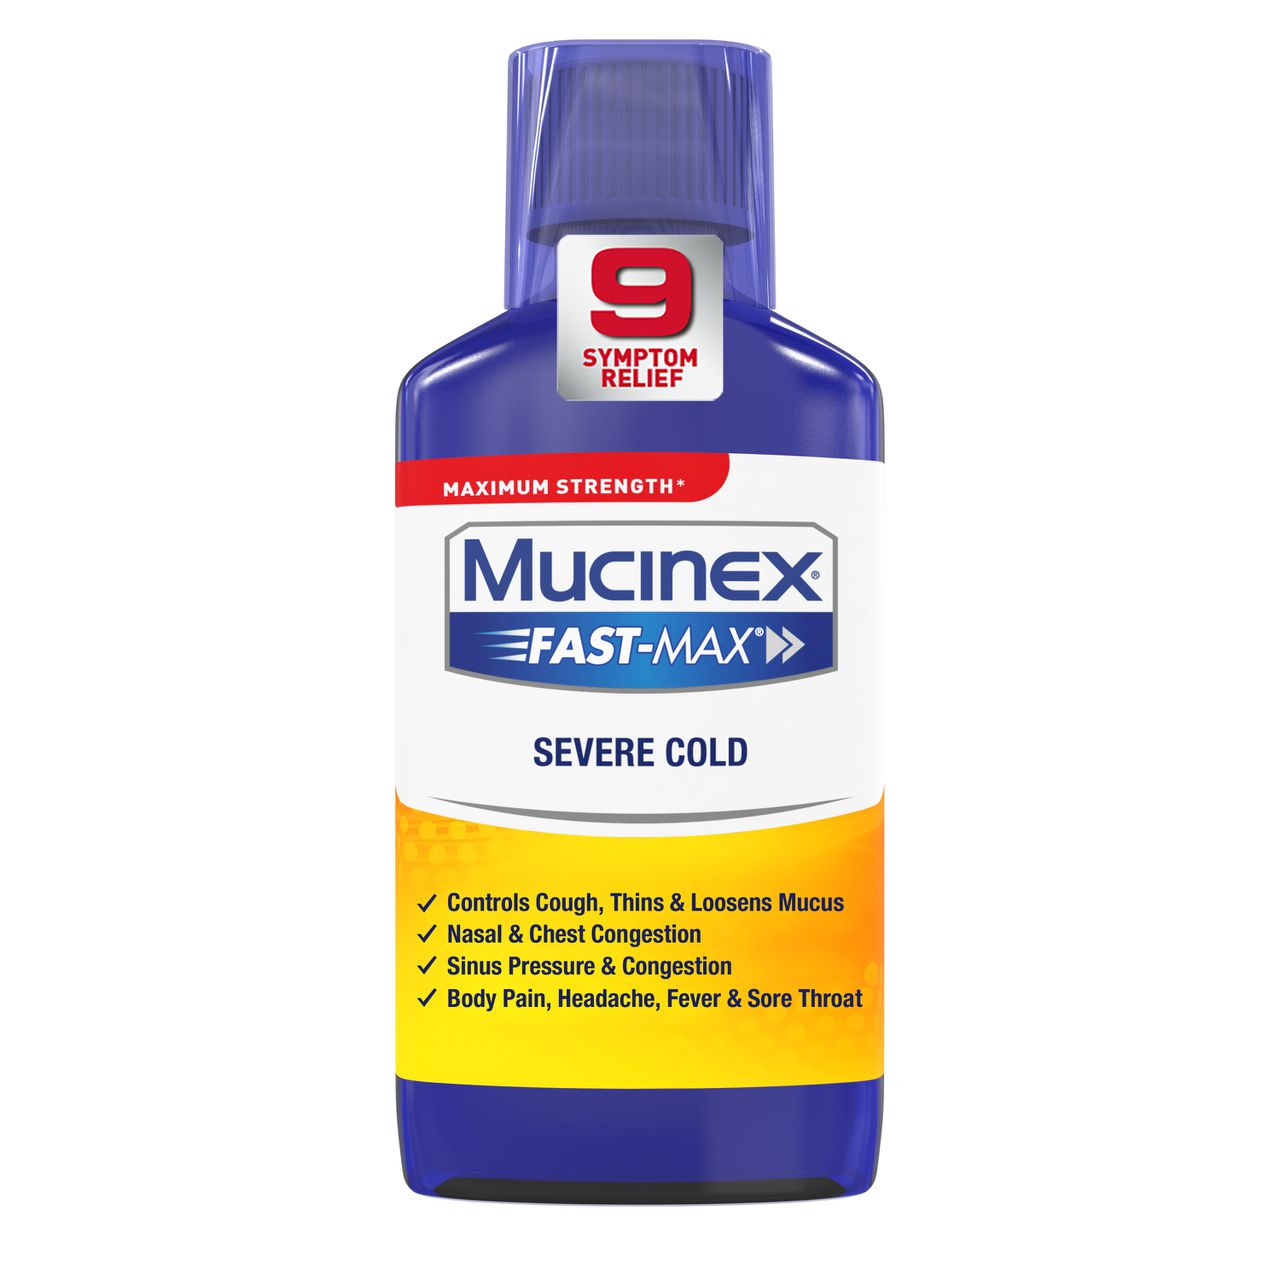 MUCINEX® Product Detail